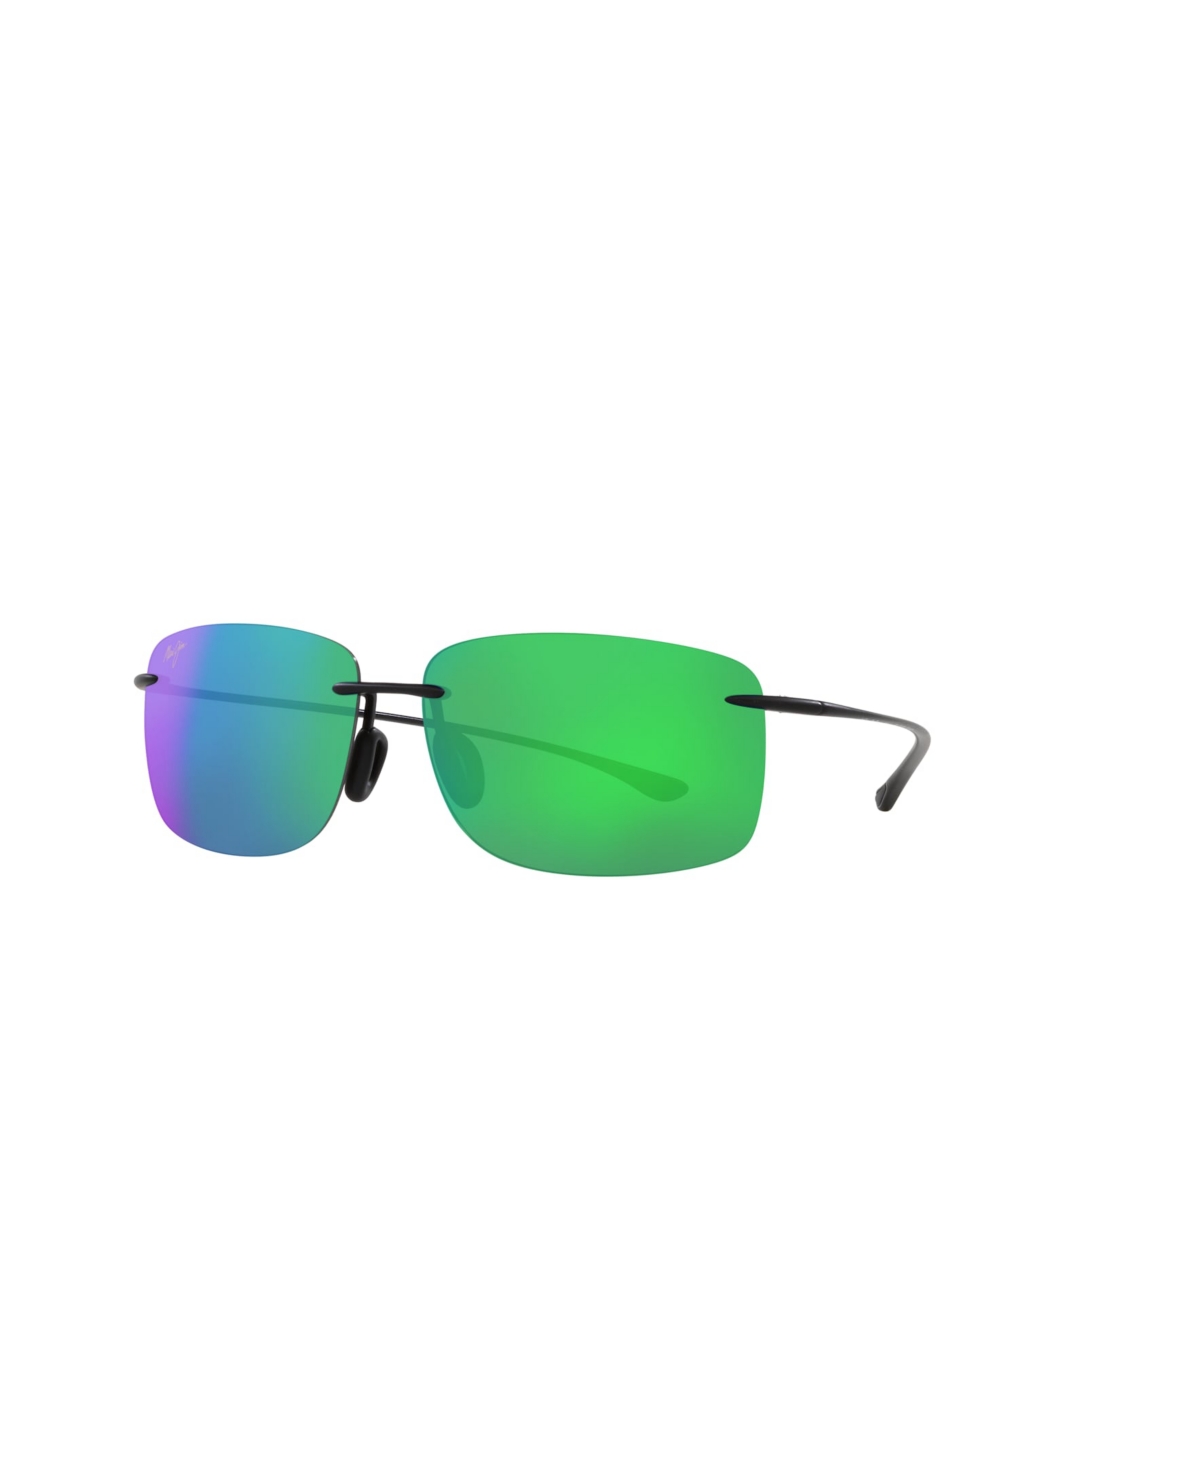 Unisex Sunglasses, Hema Mj000641 - Black Matte